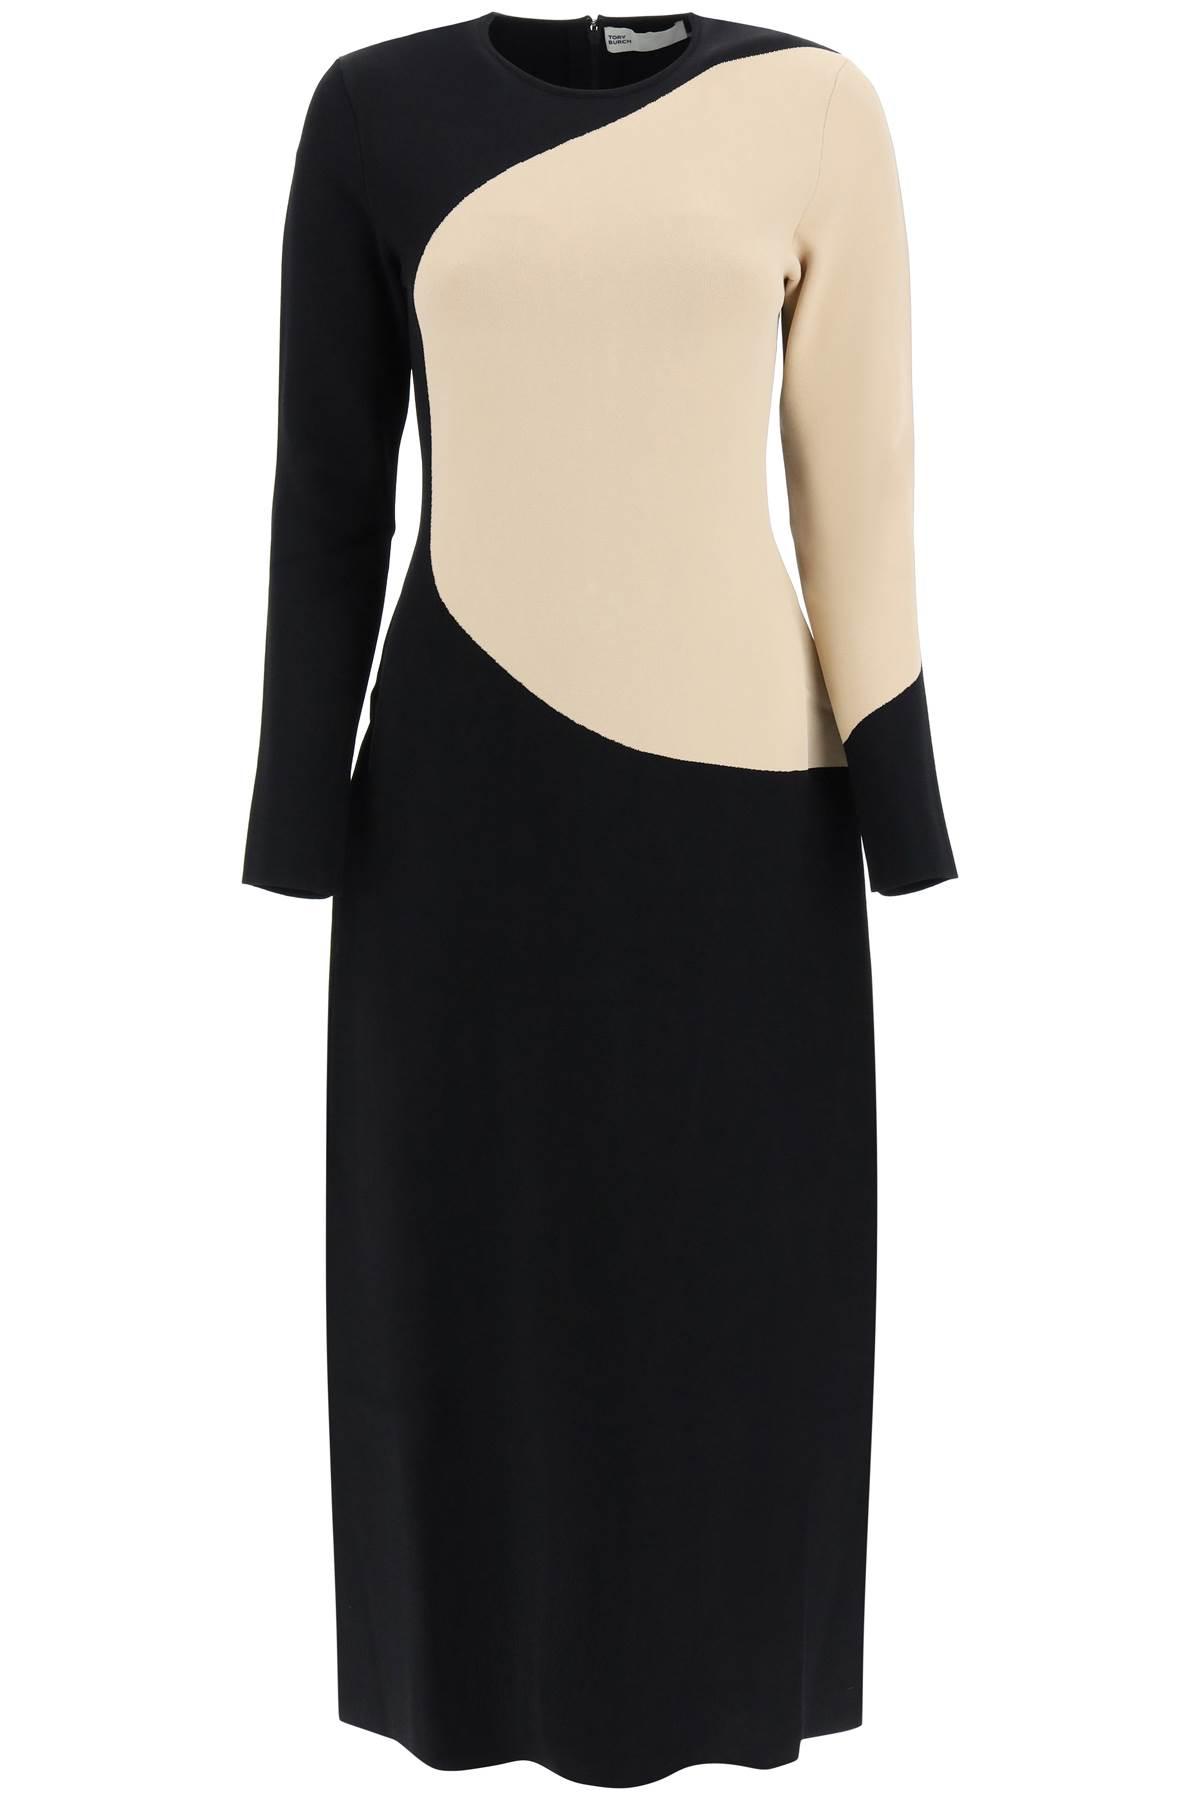 Tory Burch Color-block Knit Dress in Black | Lyst